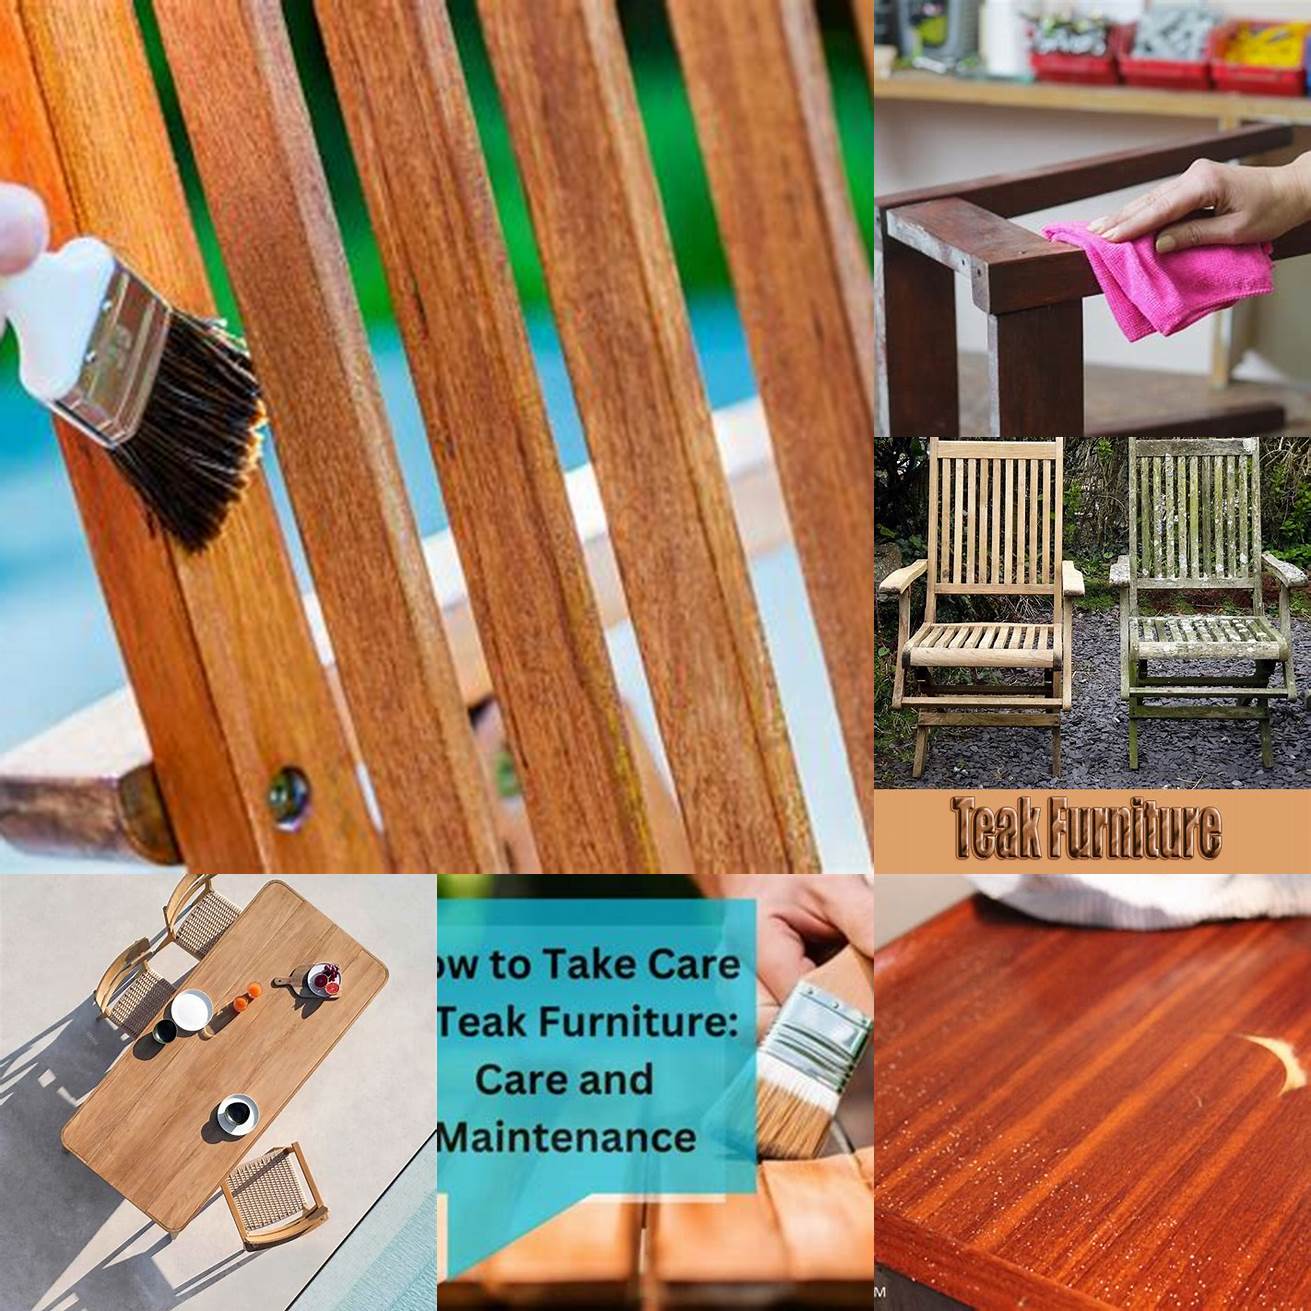 6 Wall Street Journal Teak Furniture Maintenance